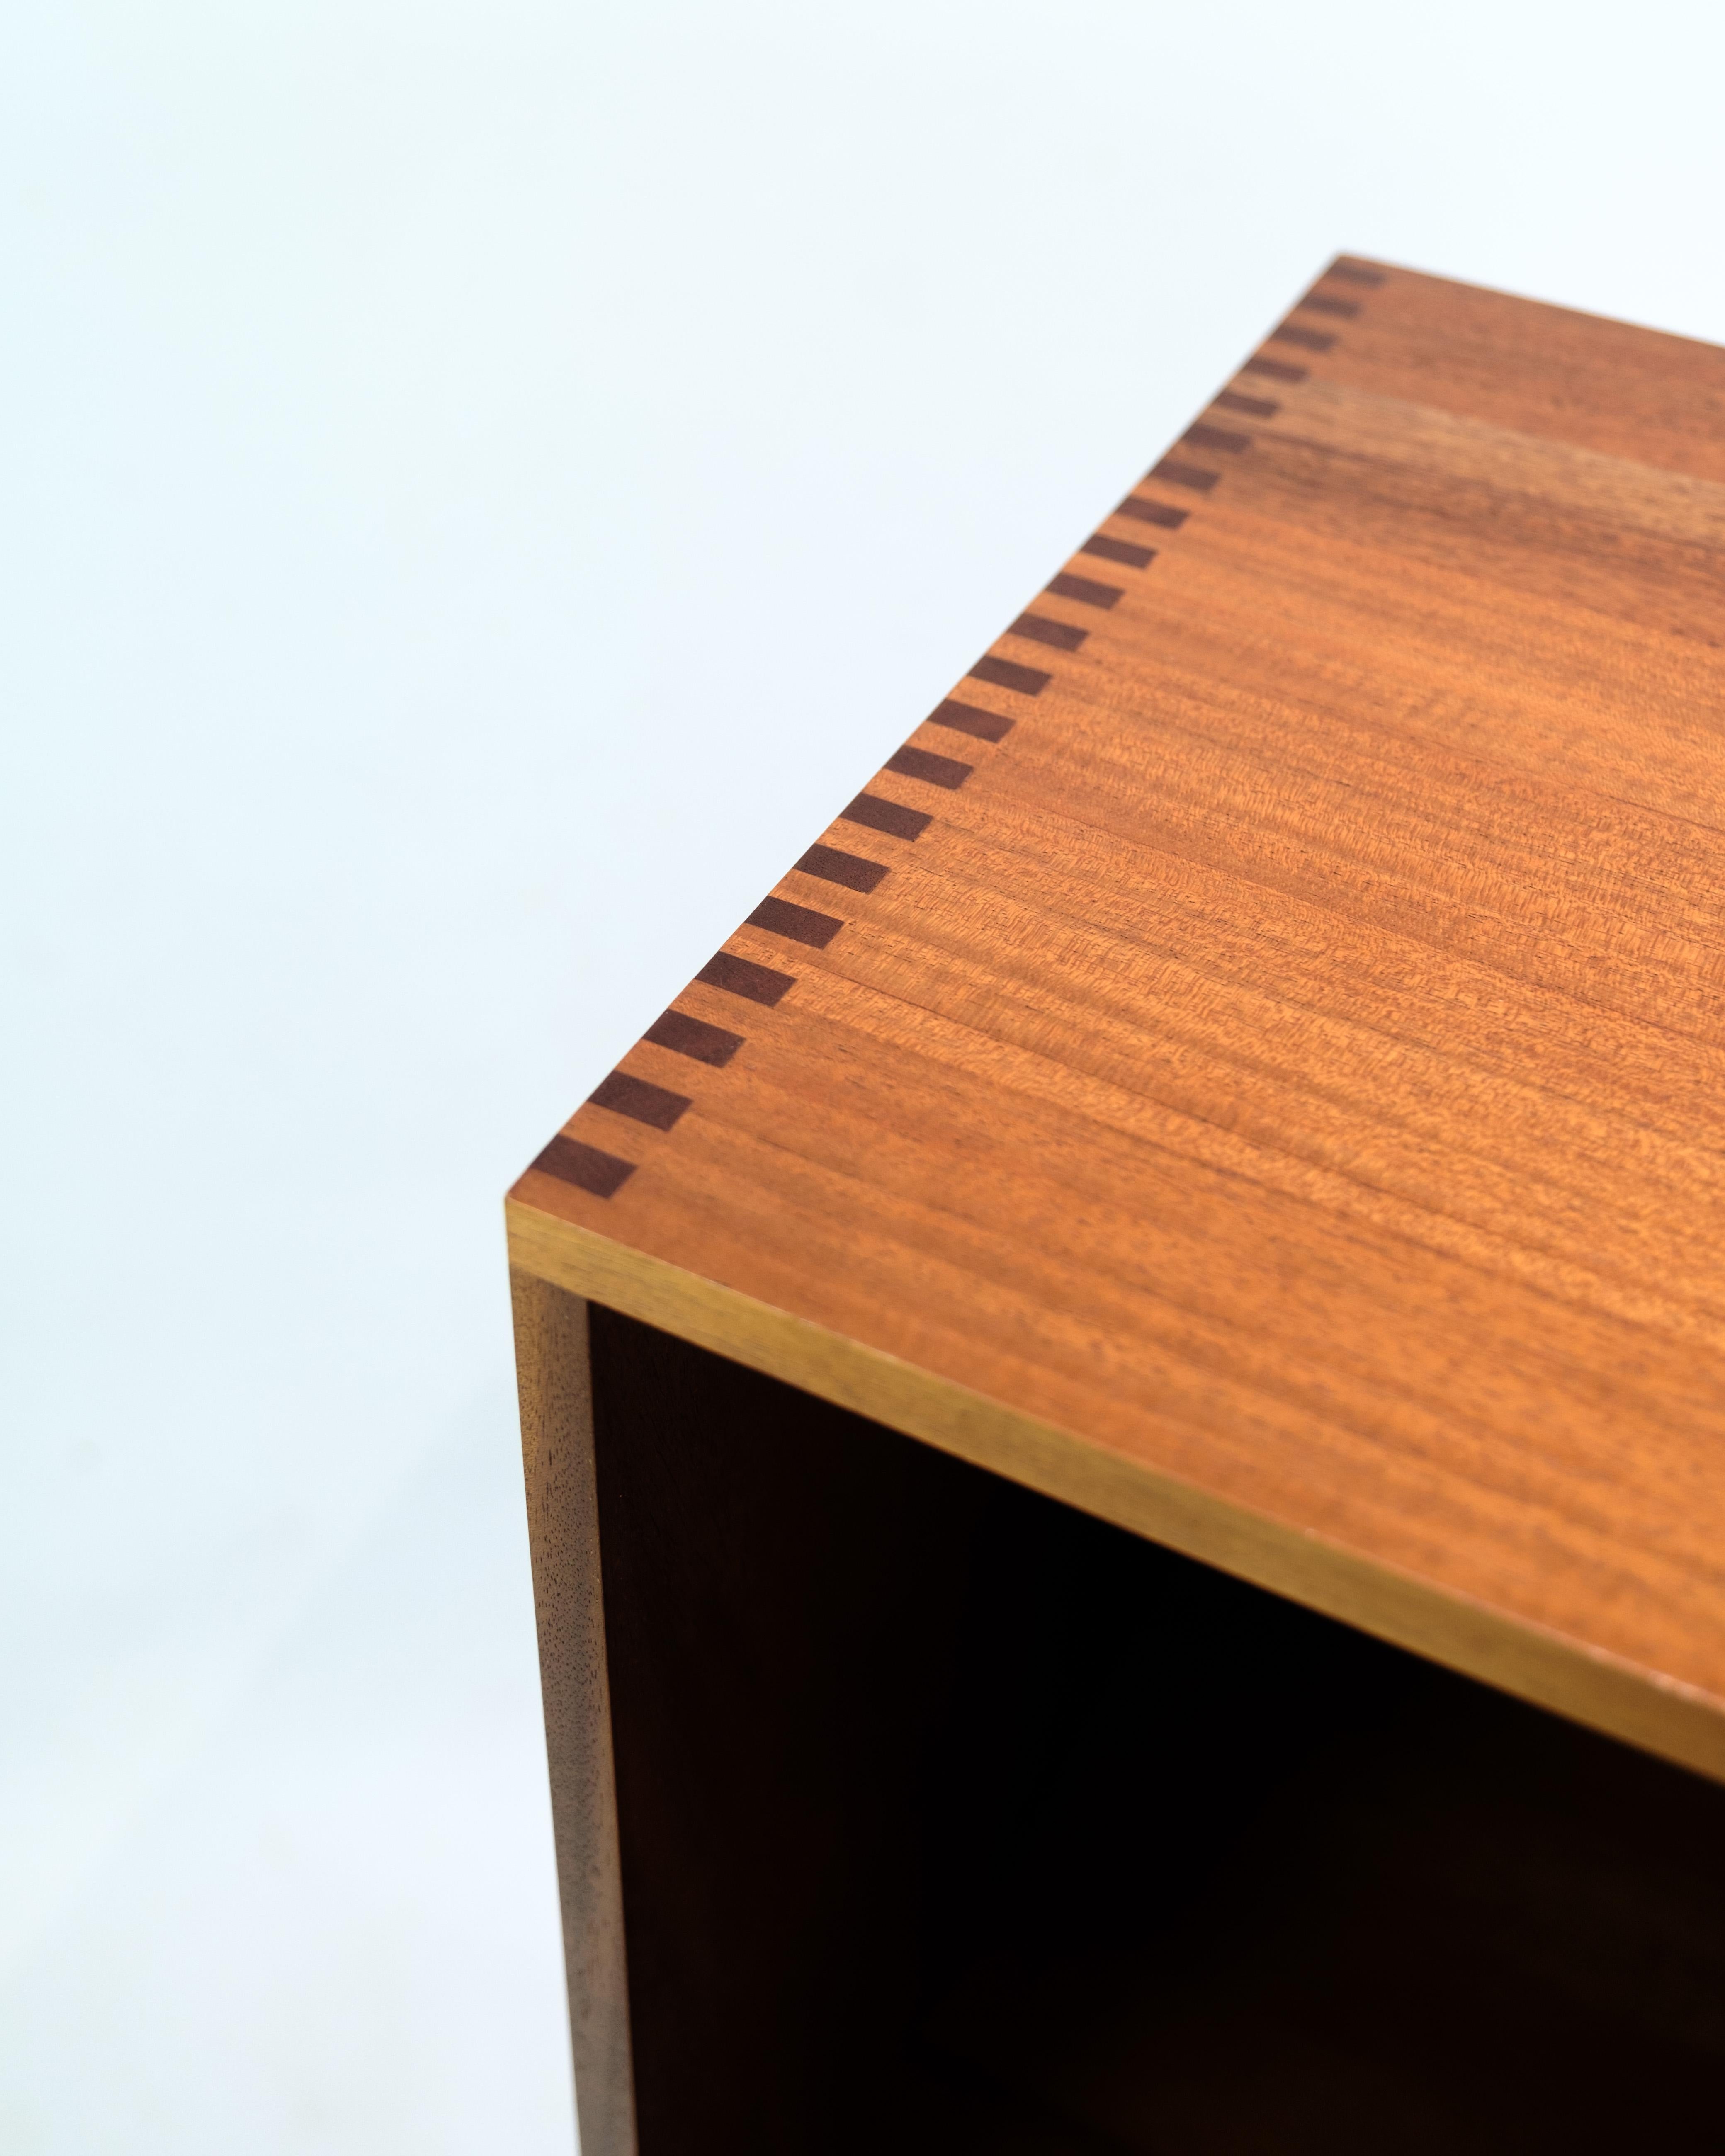 Mid-20th Century Bookcase - Shelf - Teak wood - Danish design - Tap collections - 1960 For Sale